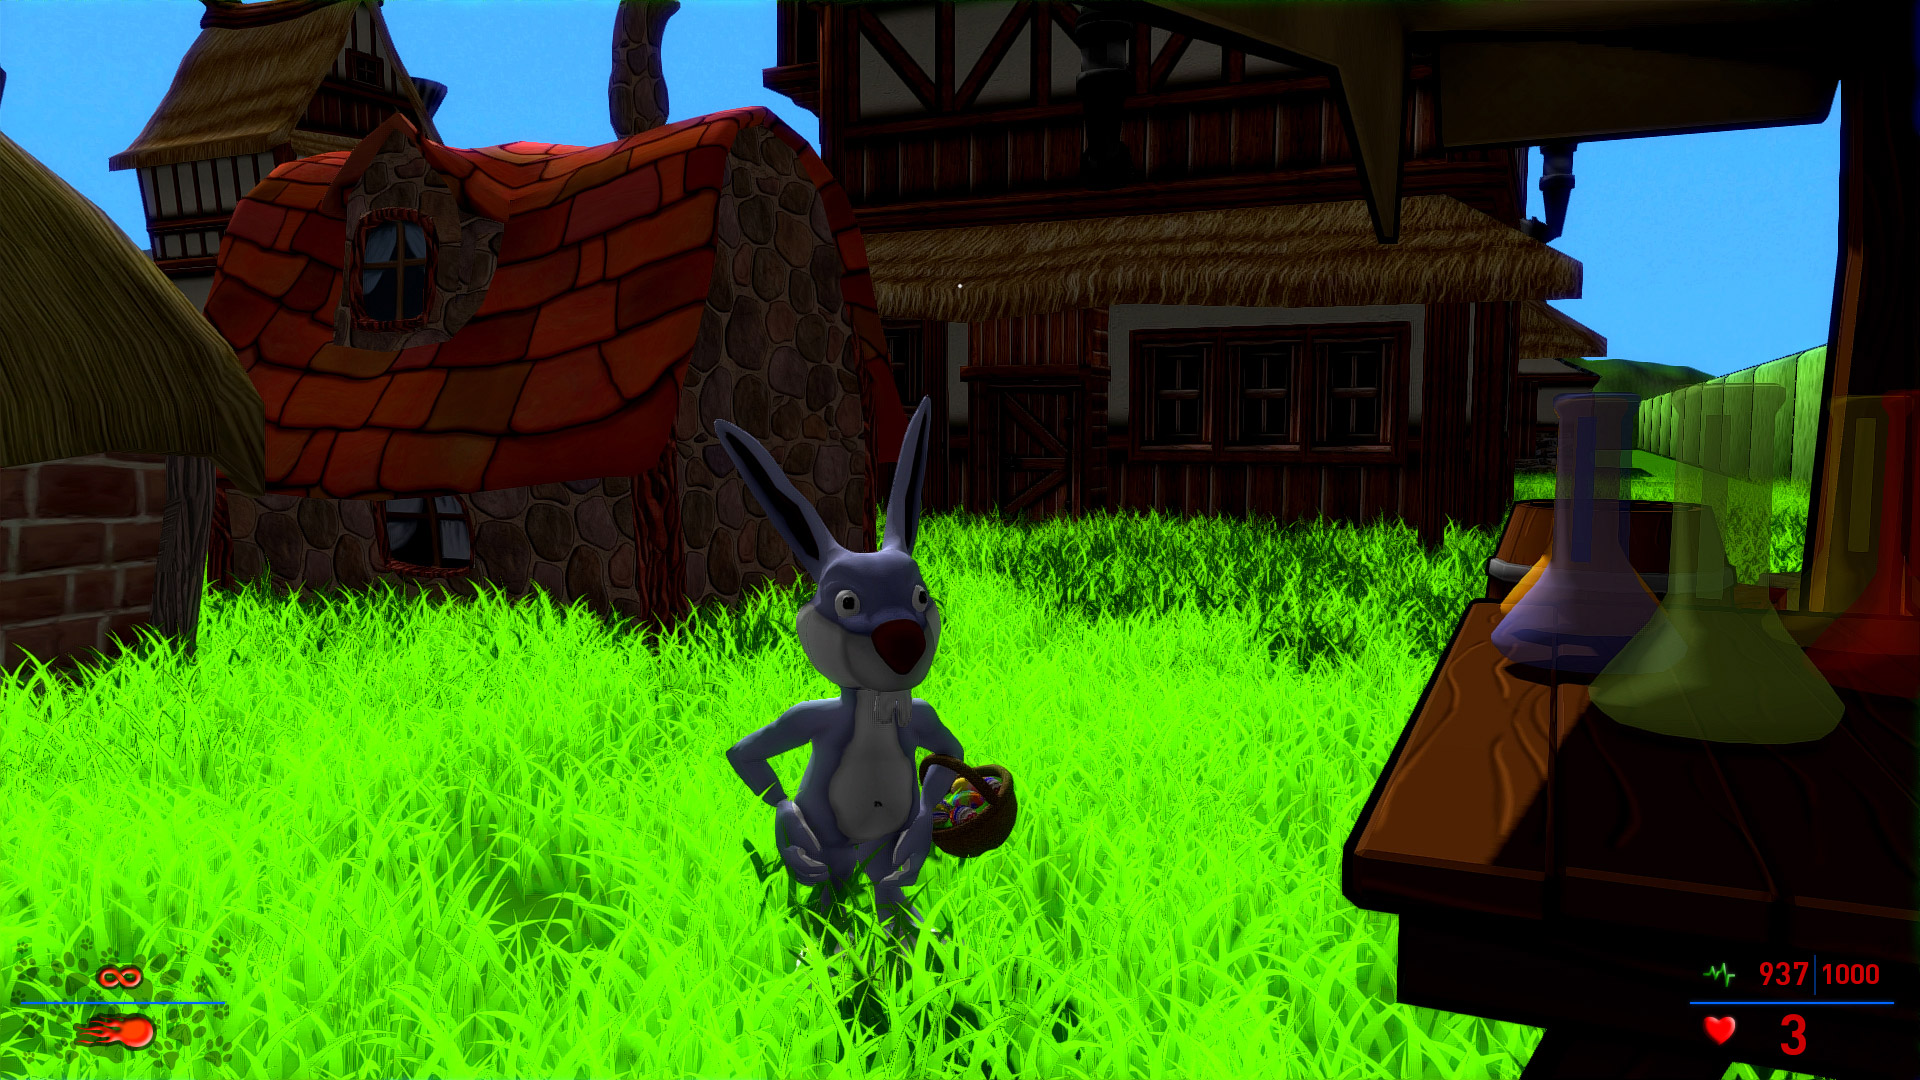 Hopper Rabbit Free Download